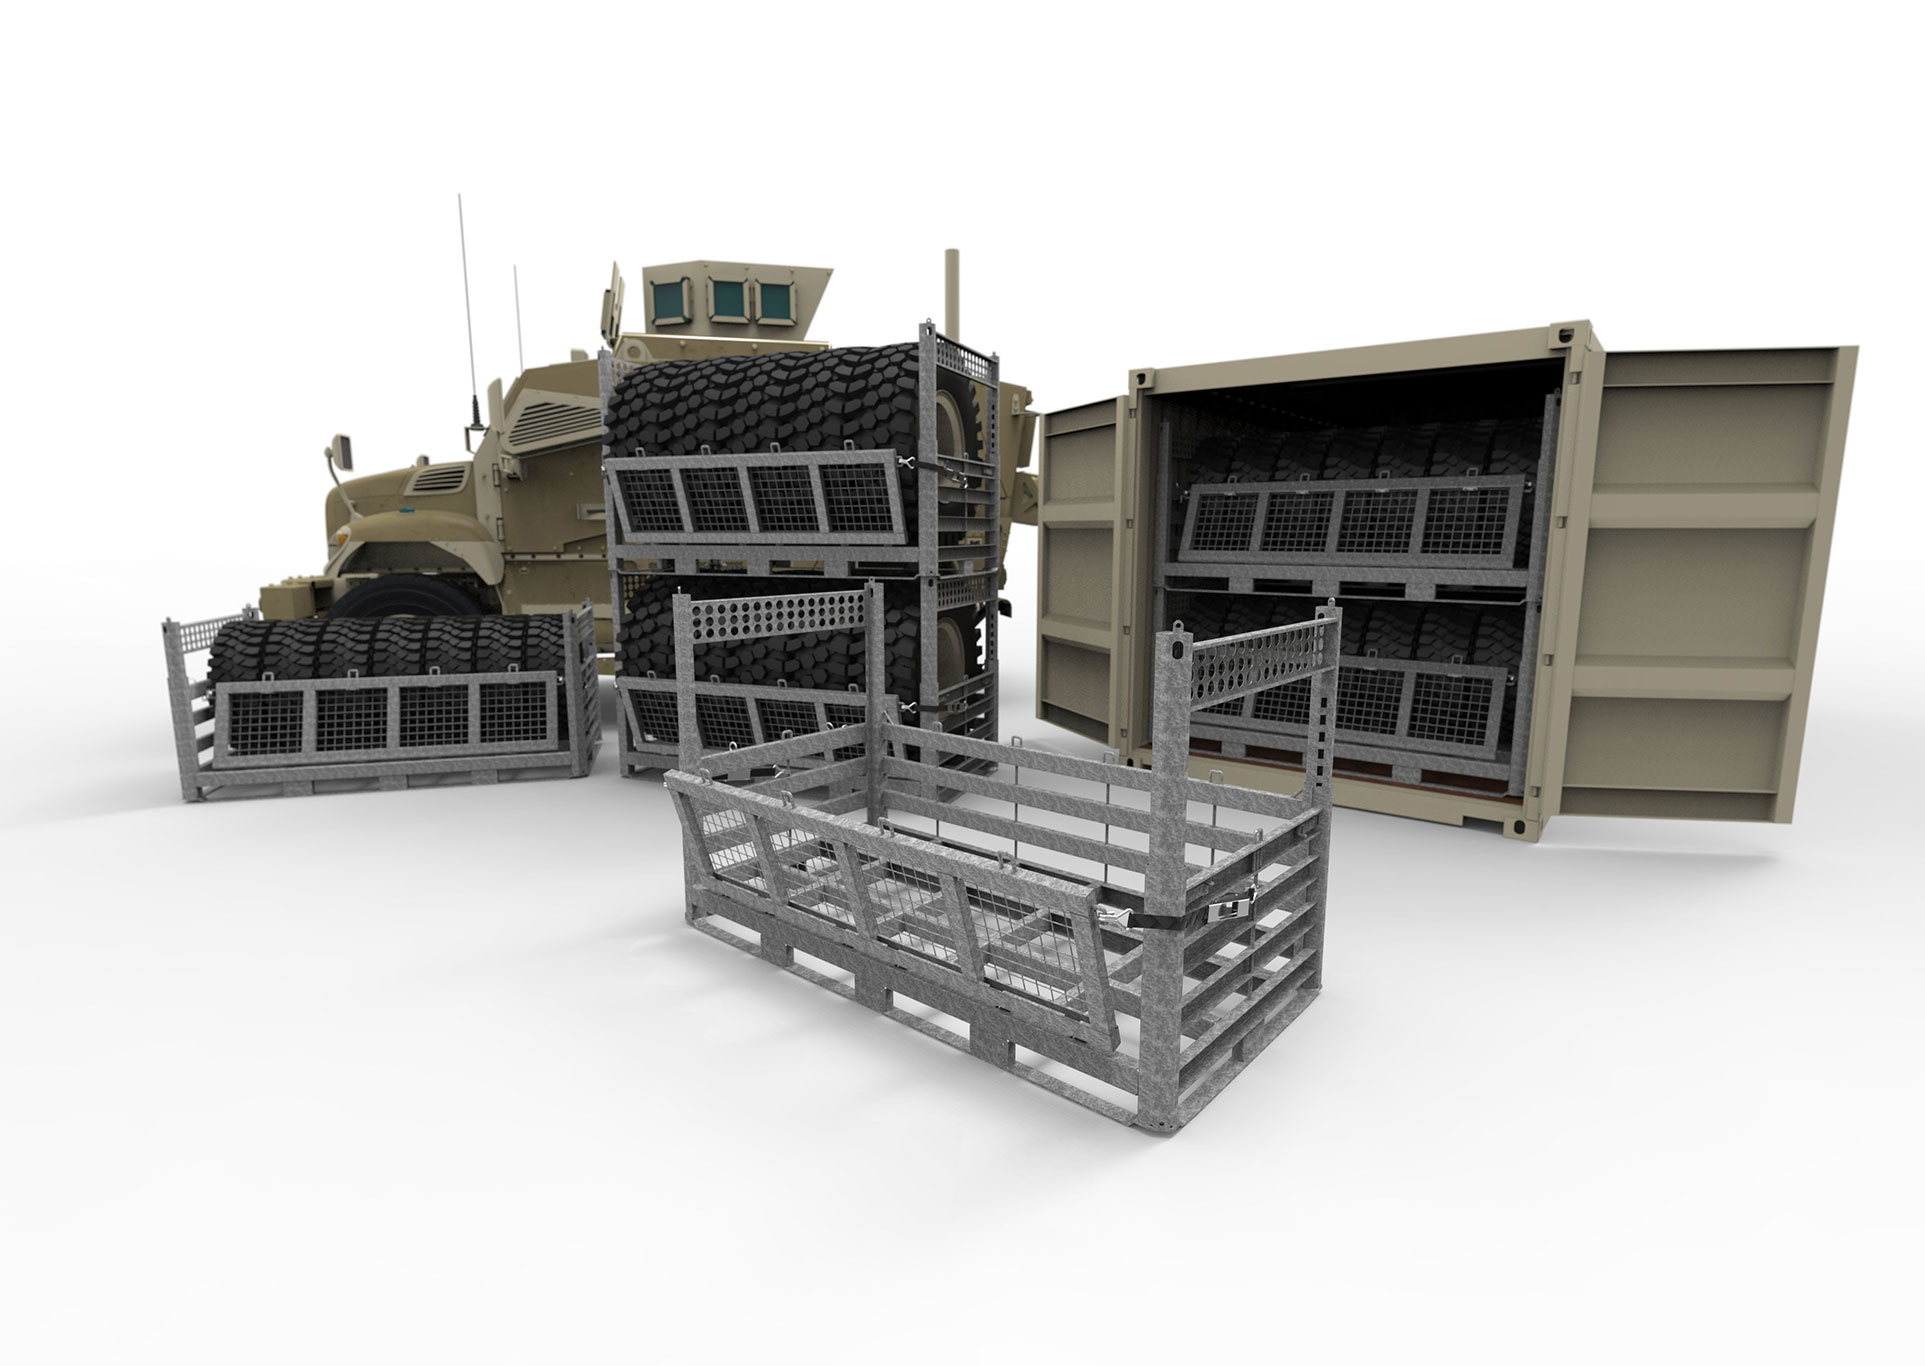 Deployable Wheel Racks for Military Storage